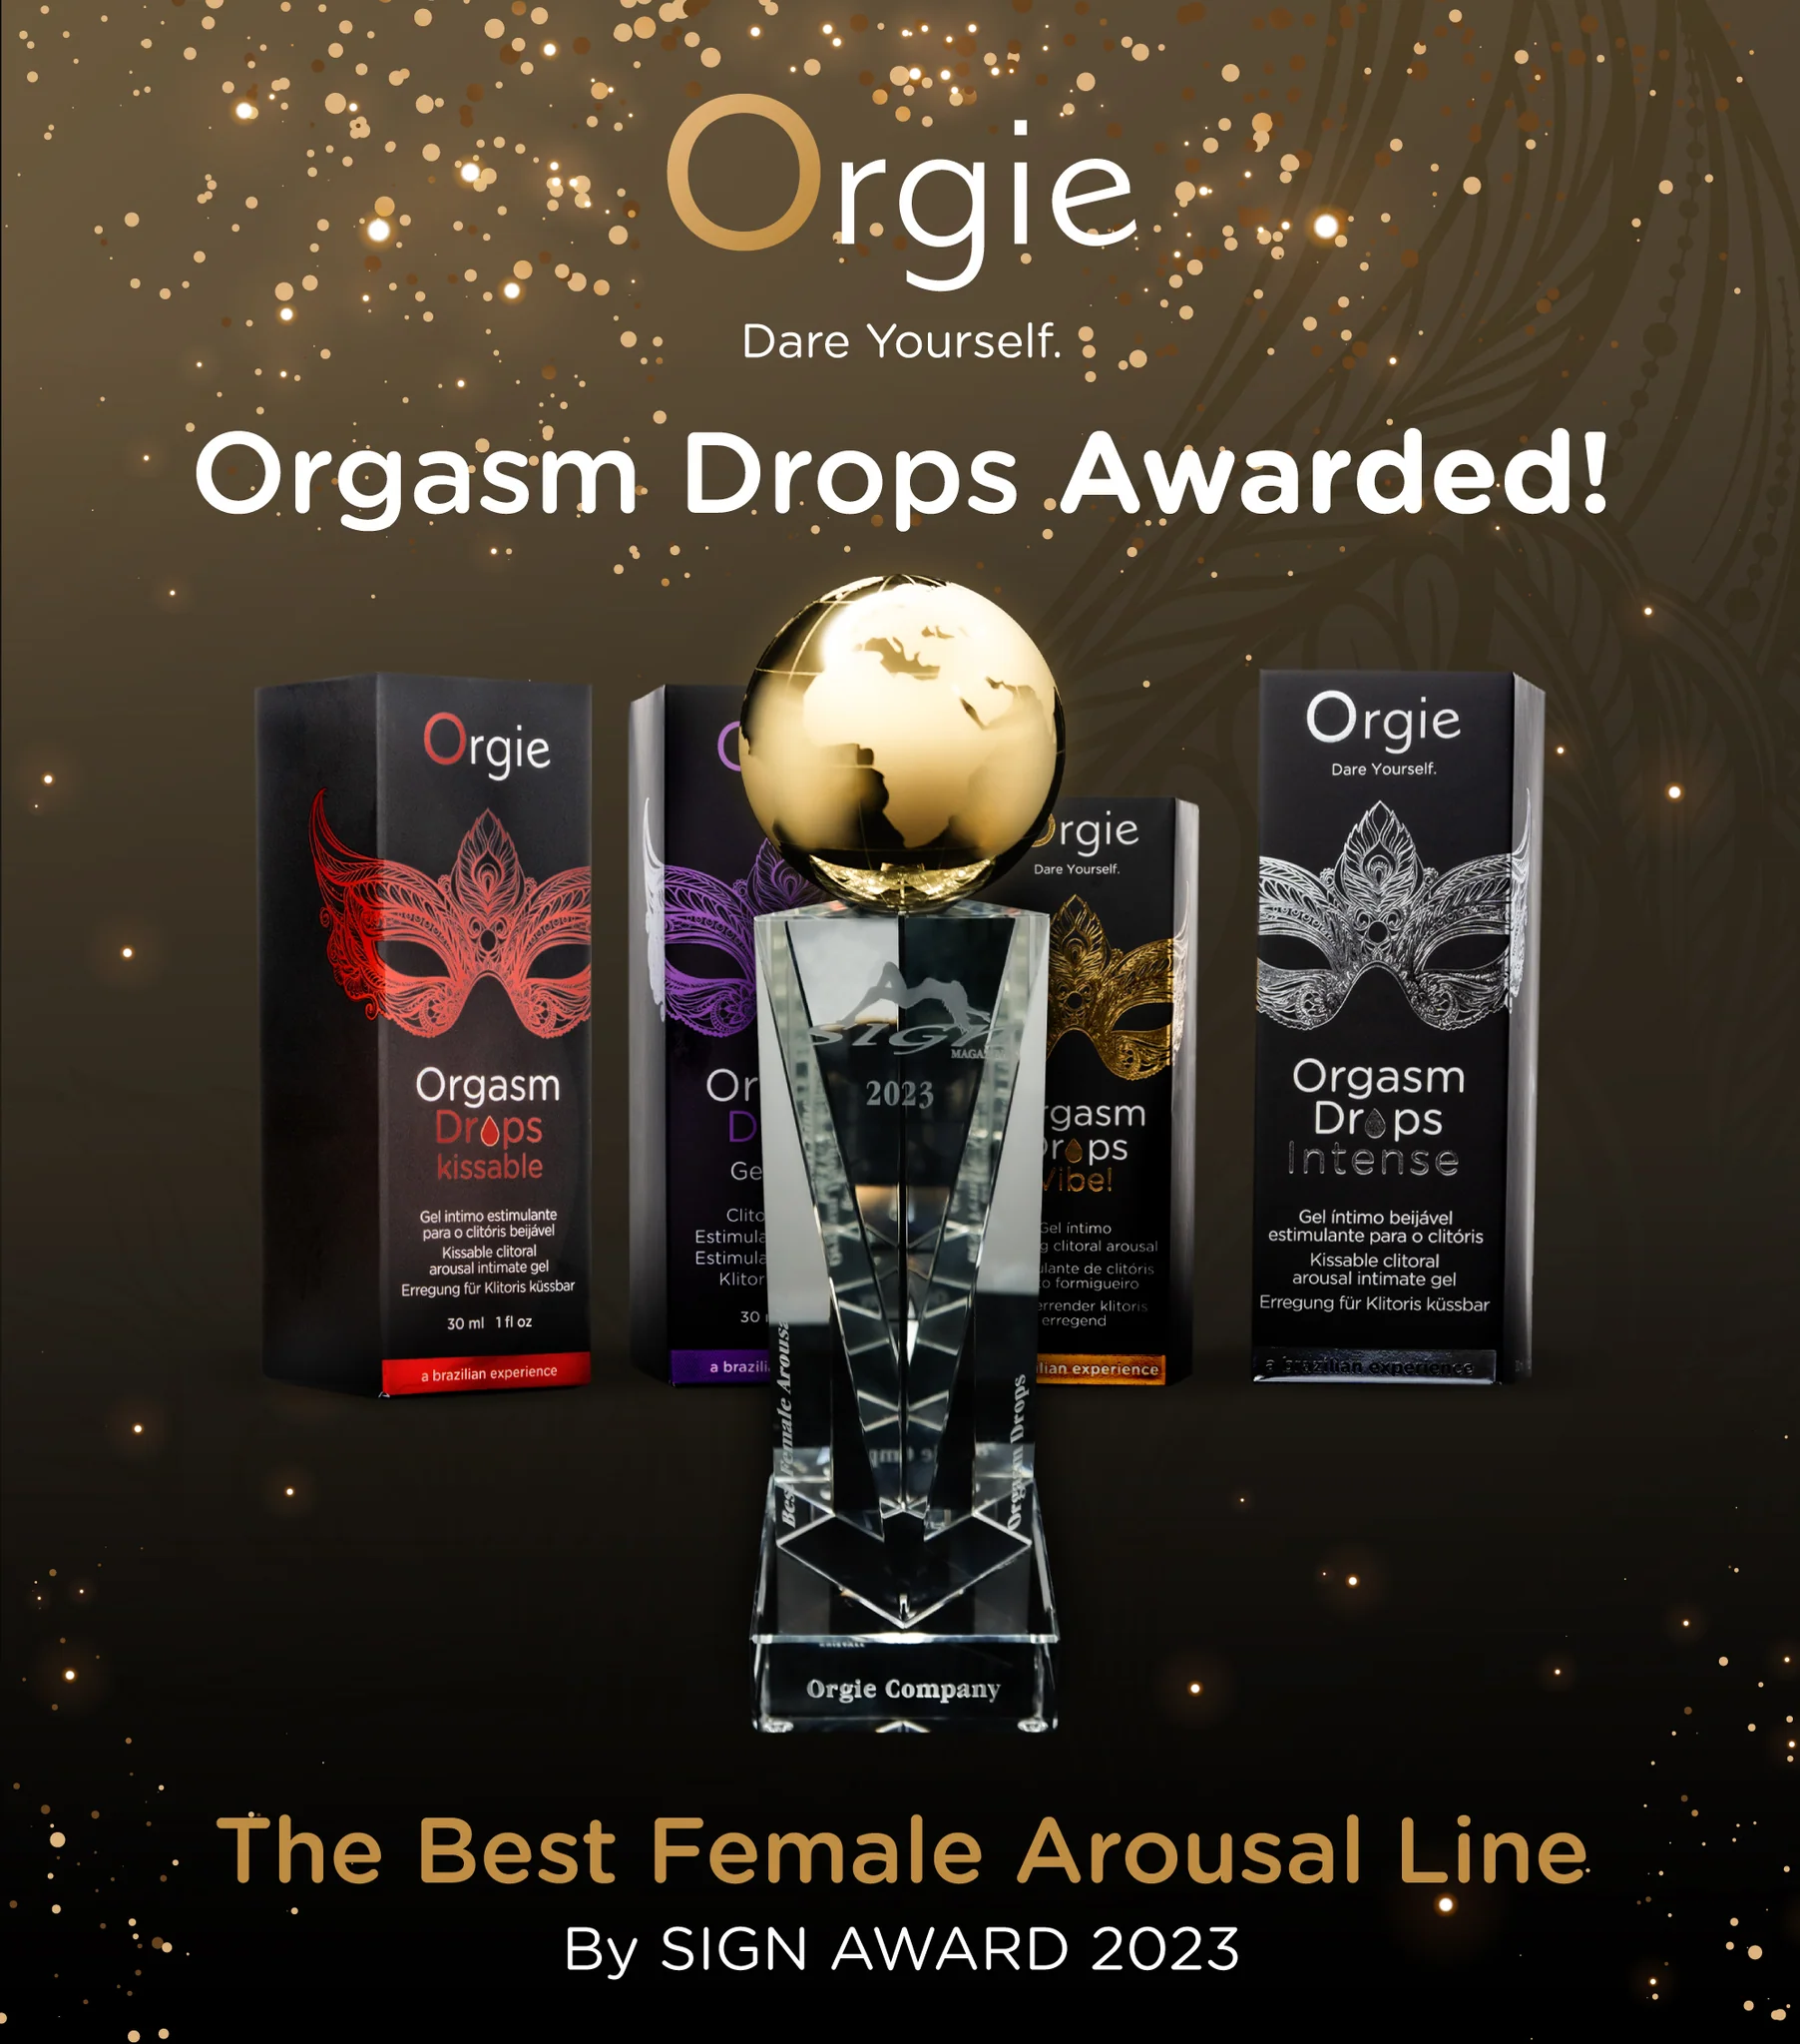 Orgasm Drops Line Awarded (Sign Award),Orgie Orgasm Drops 高潮液獲國際獎項